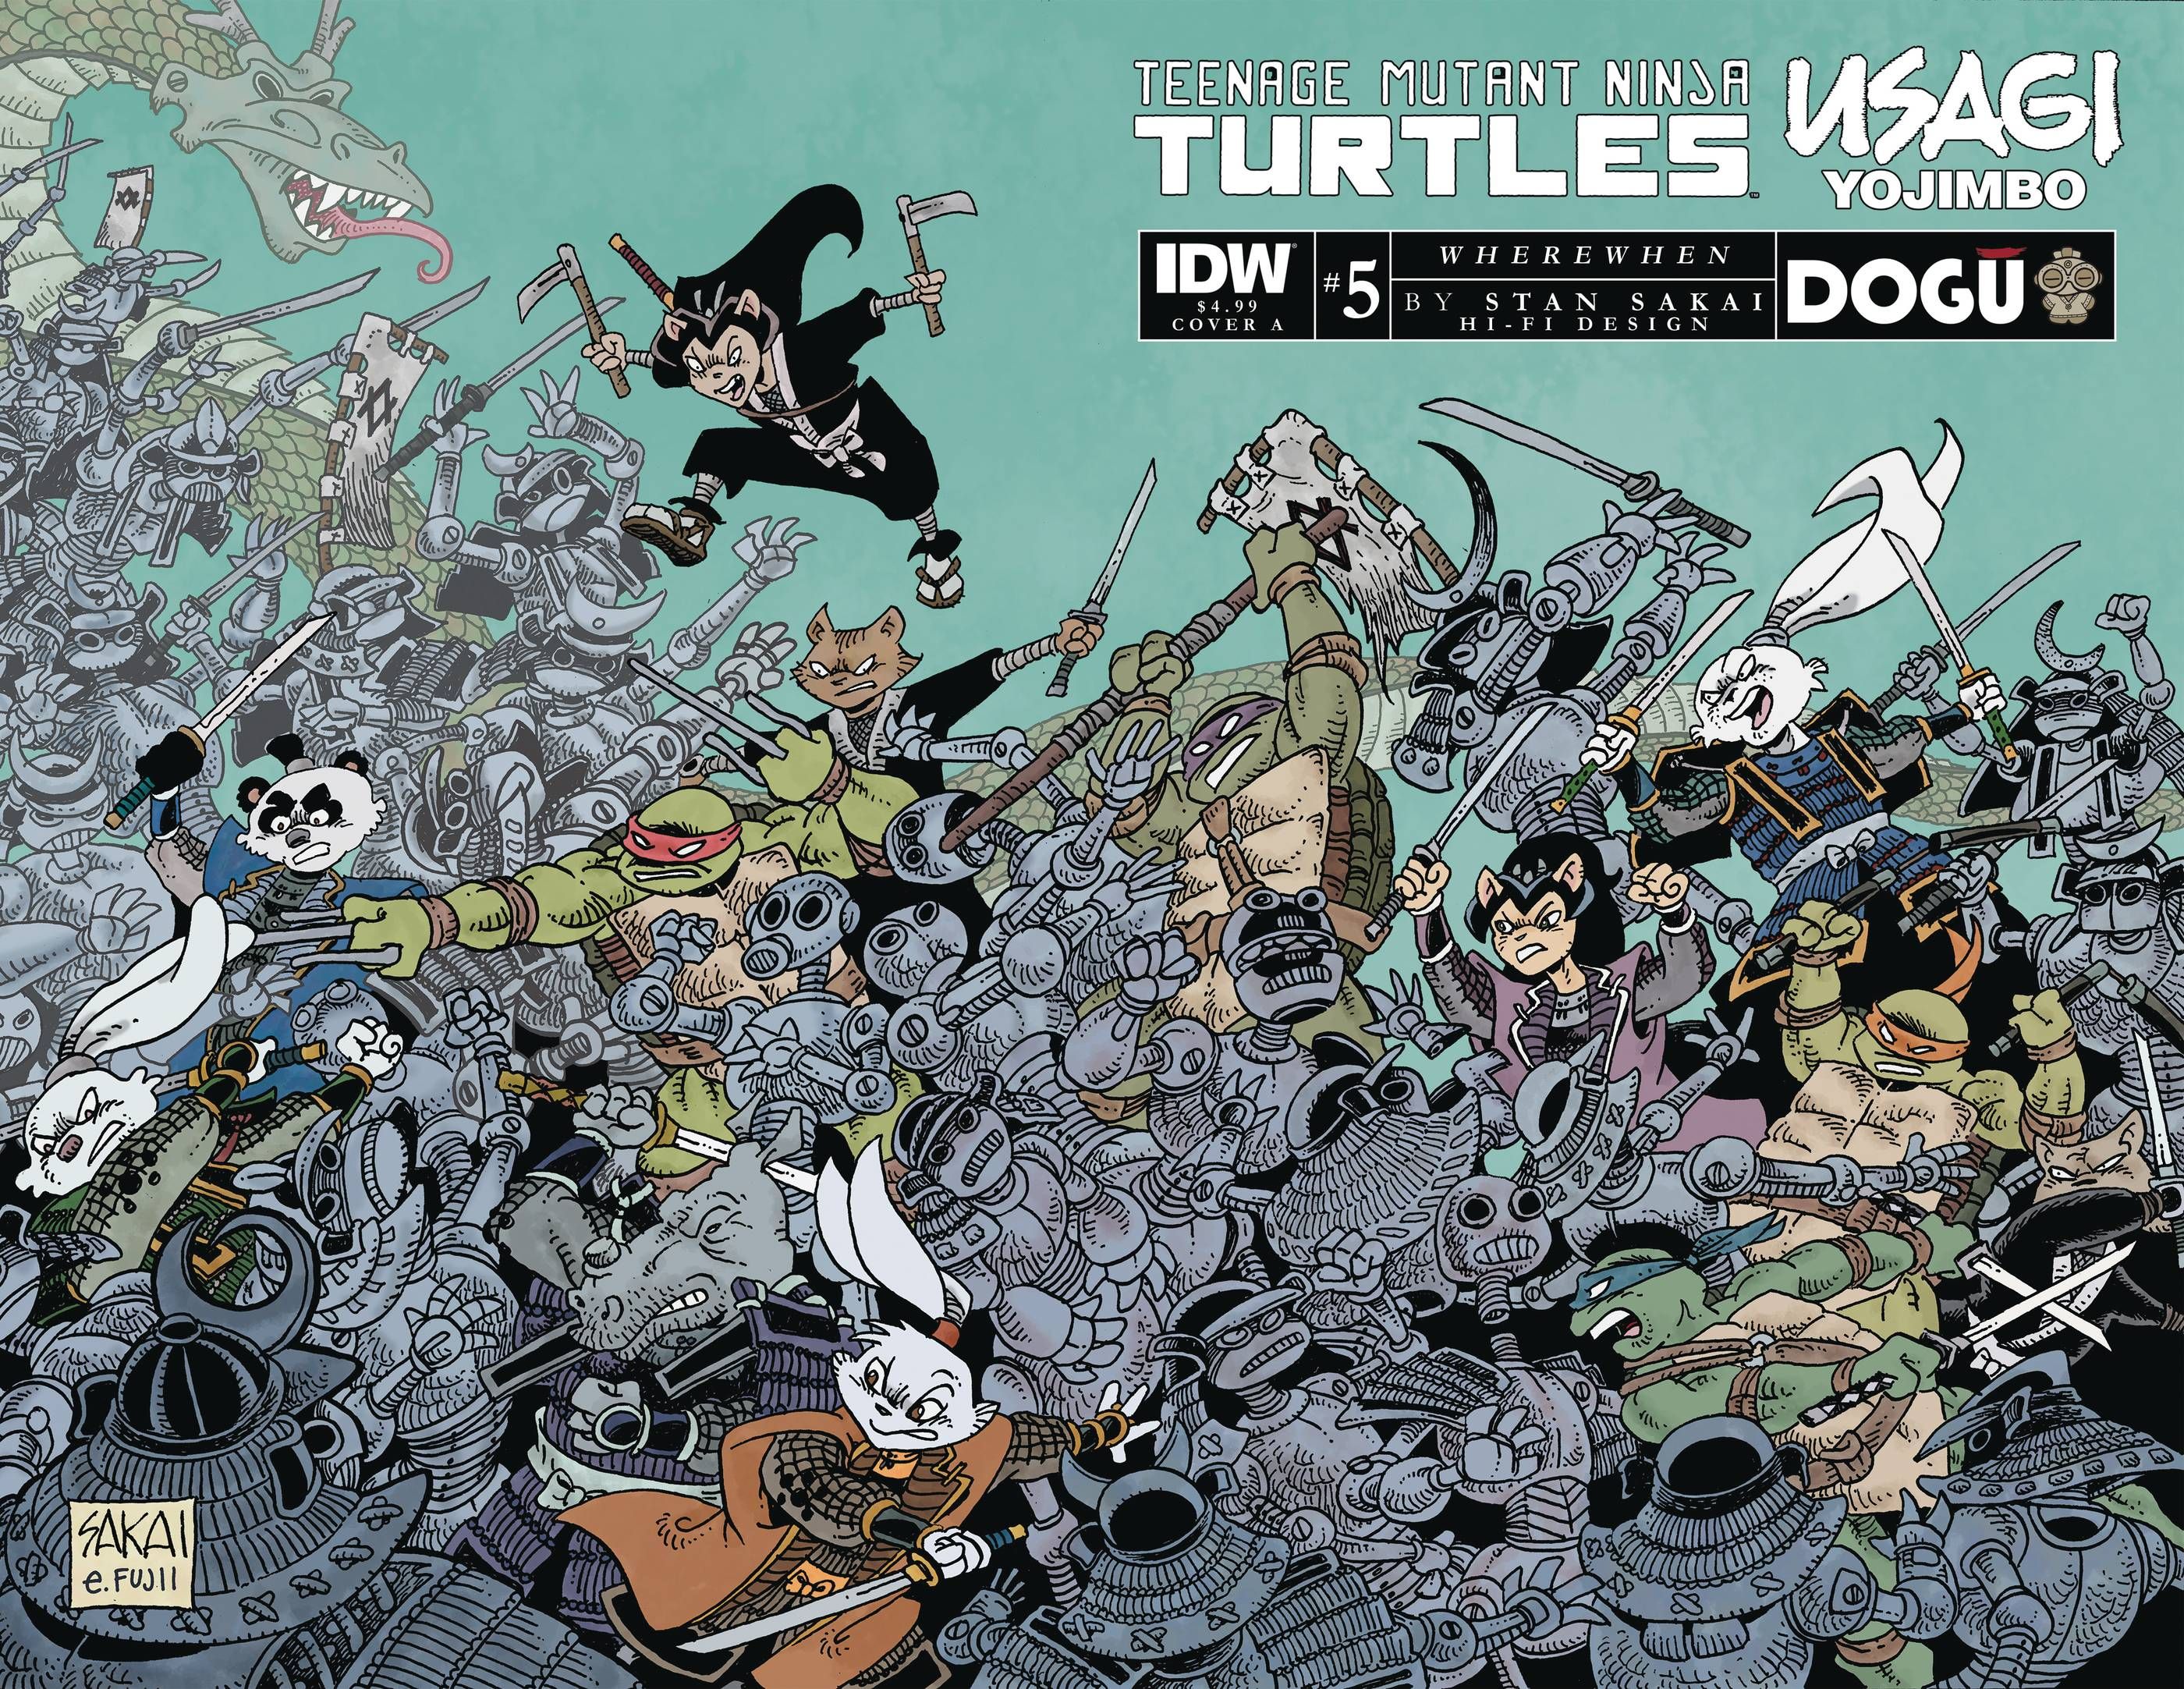 Teenage Mutant Ninja Turtles / Usagi Yojimbo: WhereWhen #5 Comic